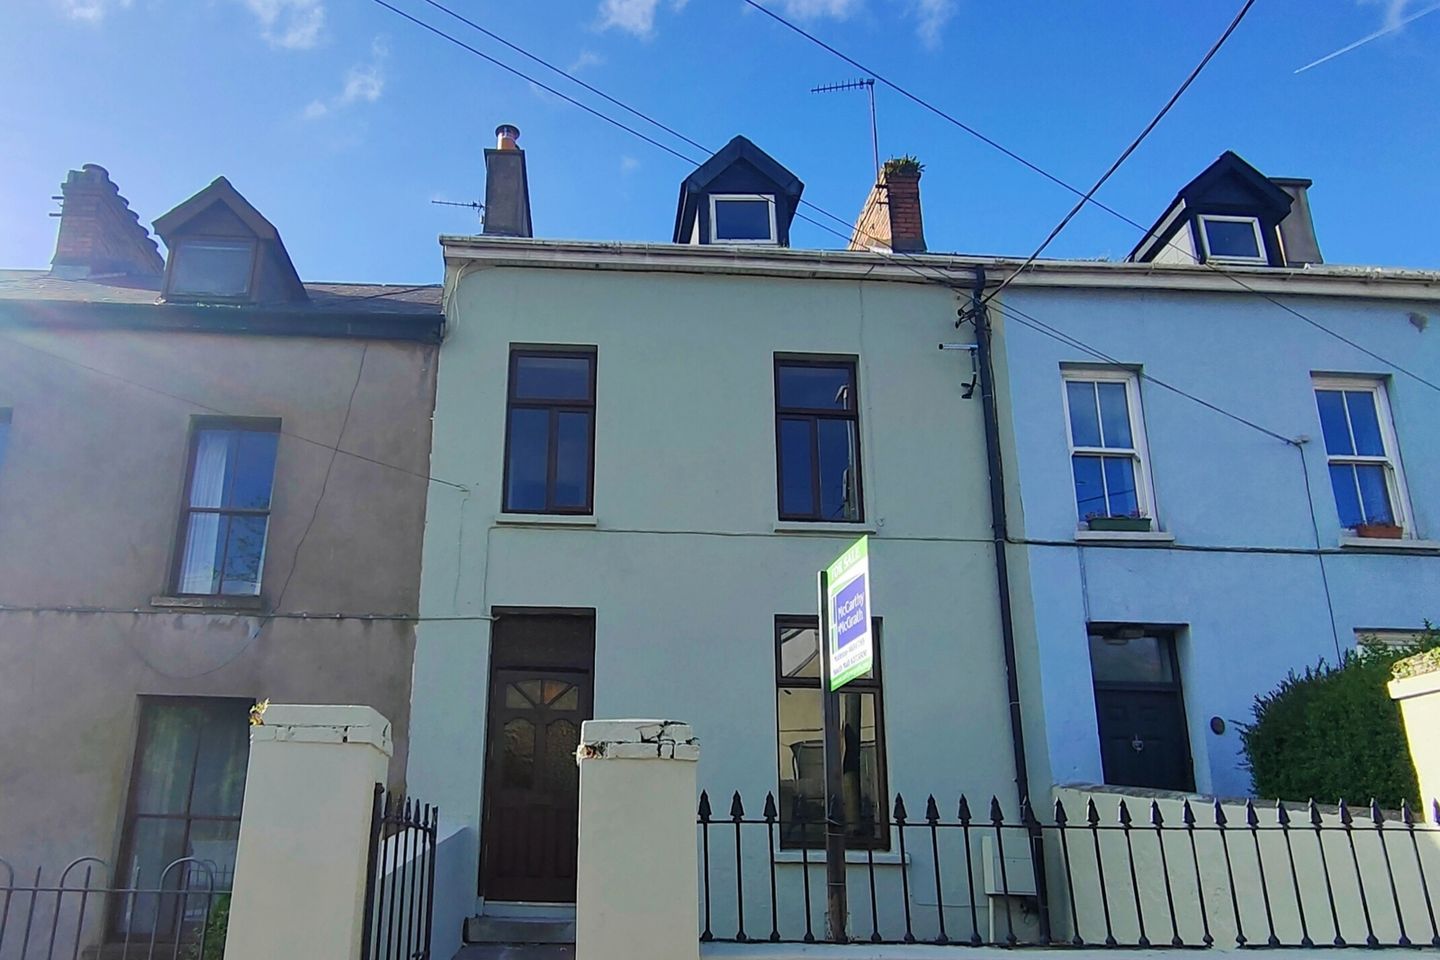 9 Mount View Terrace, Ballyhooly Road, St. Lukes, Co. Cork, T23Y5A2